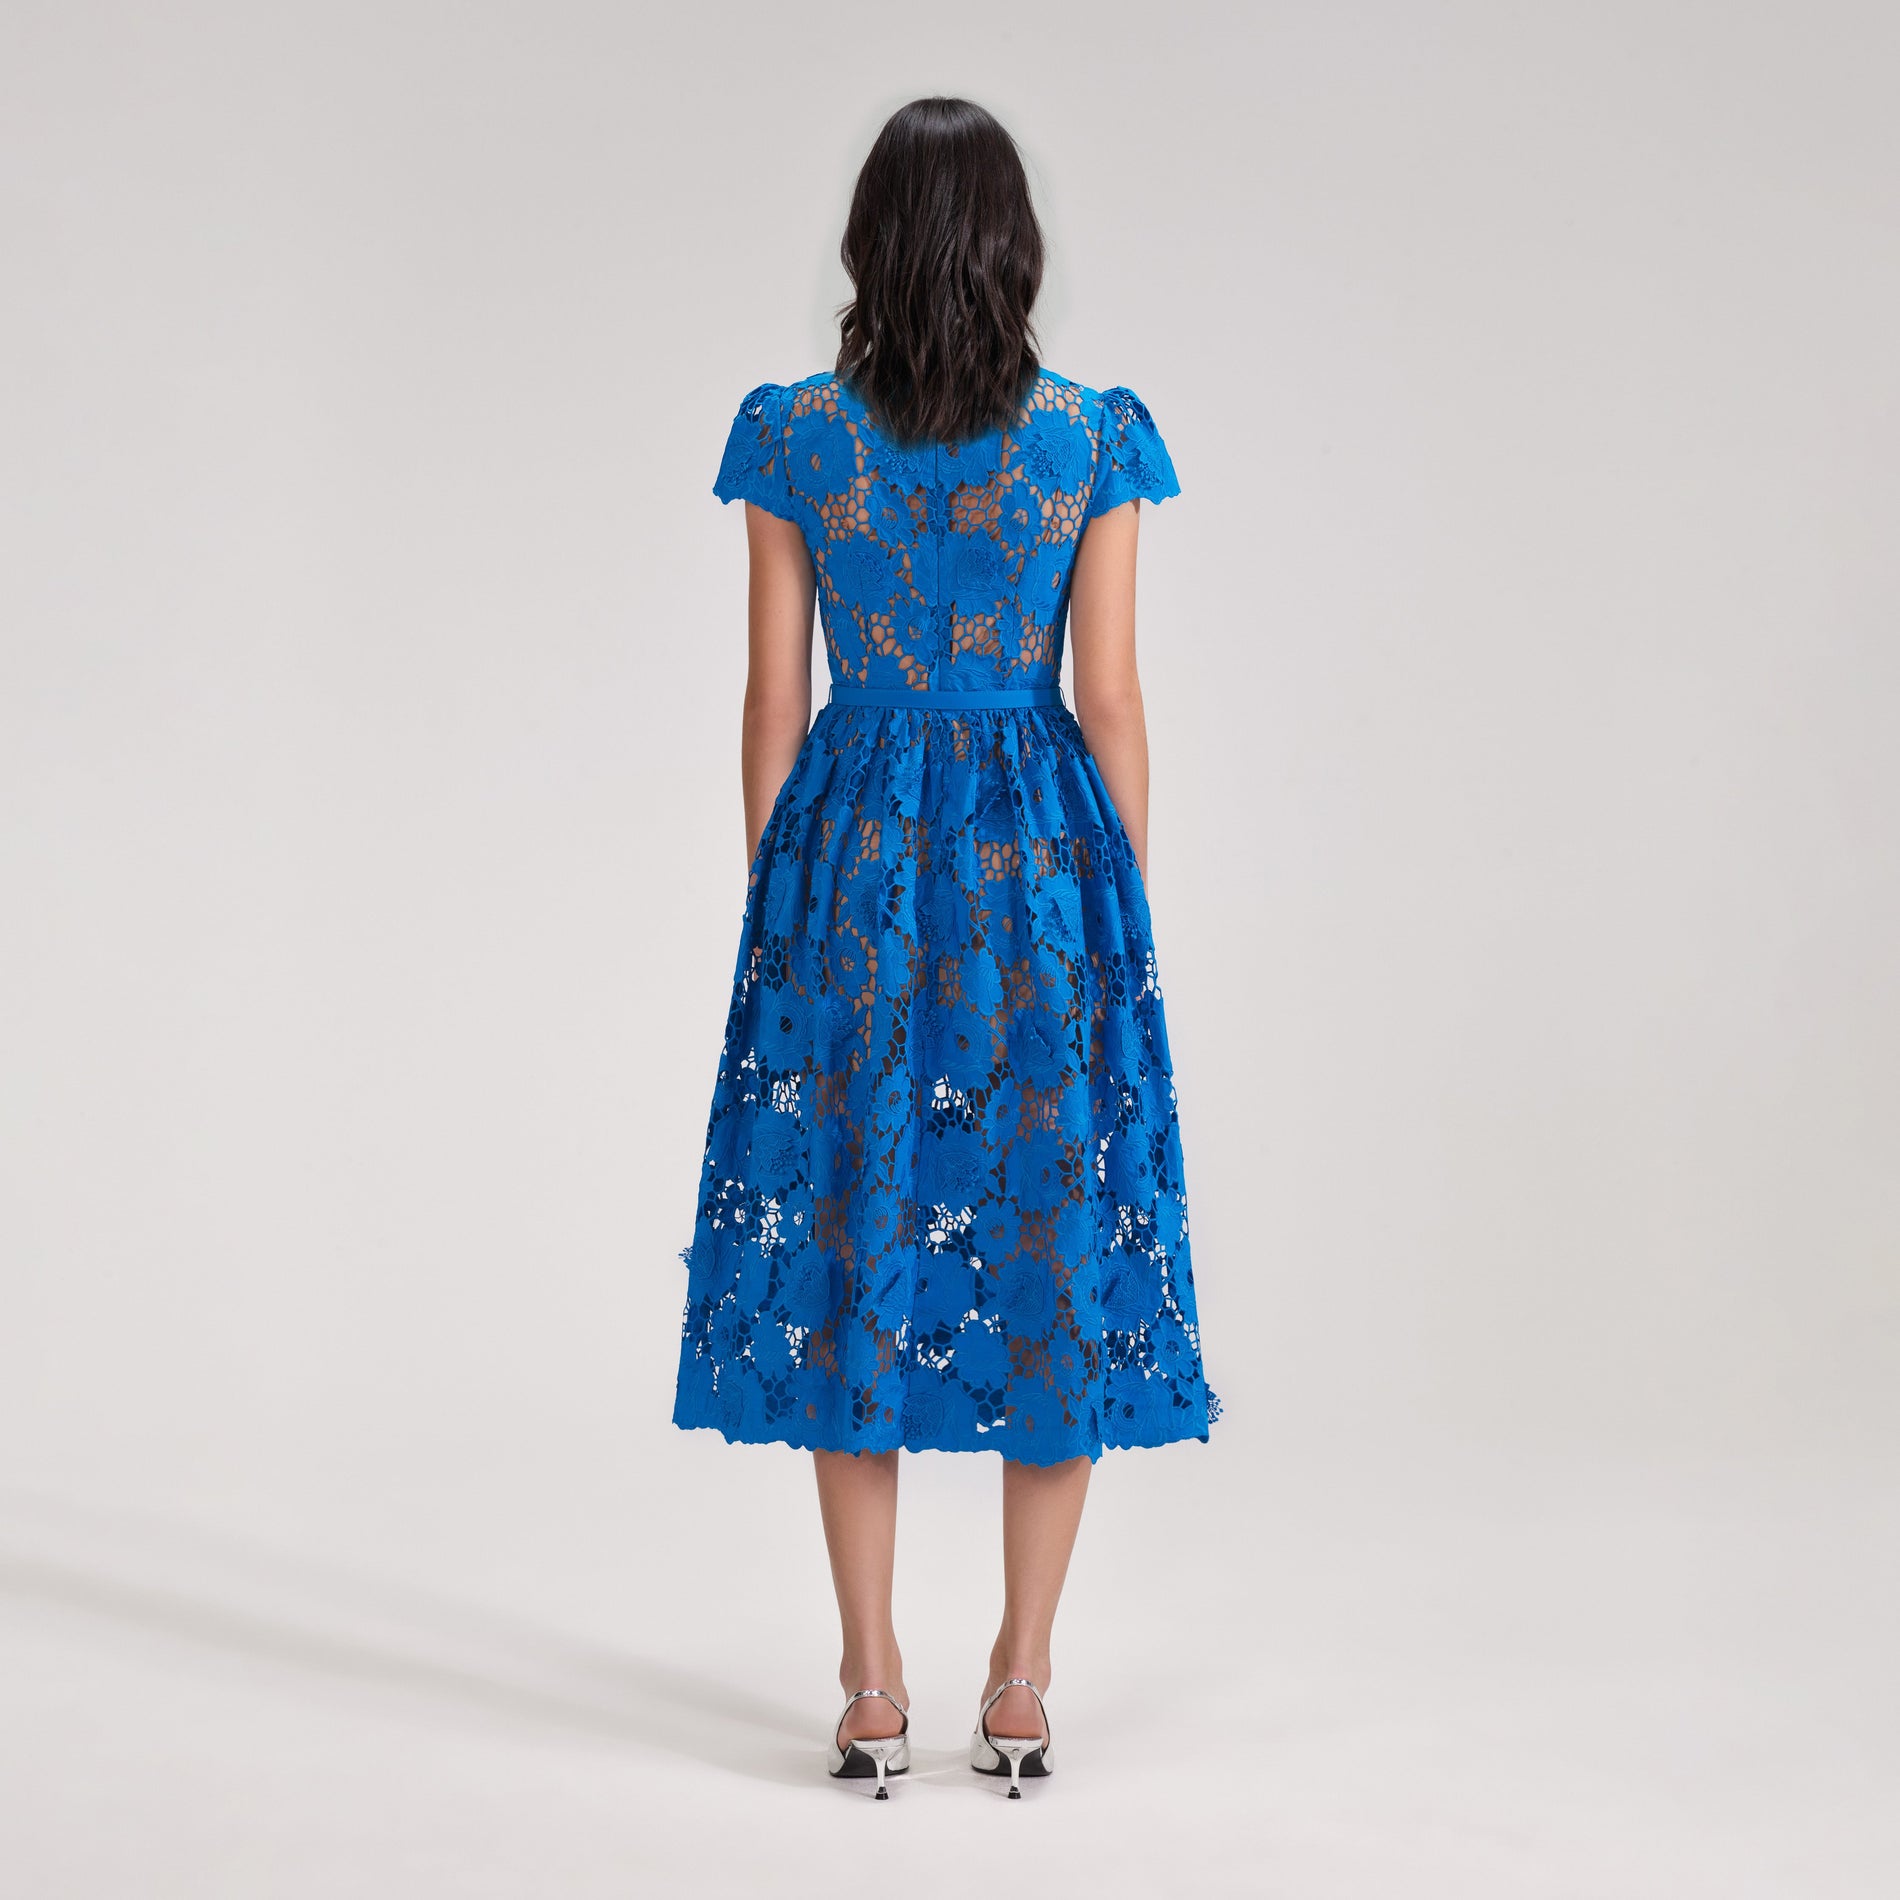 A woman wearing the Blue Poppy Midi Dress